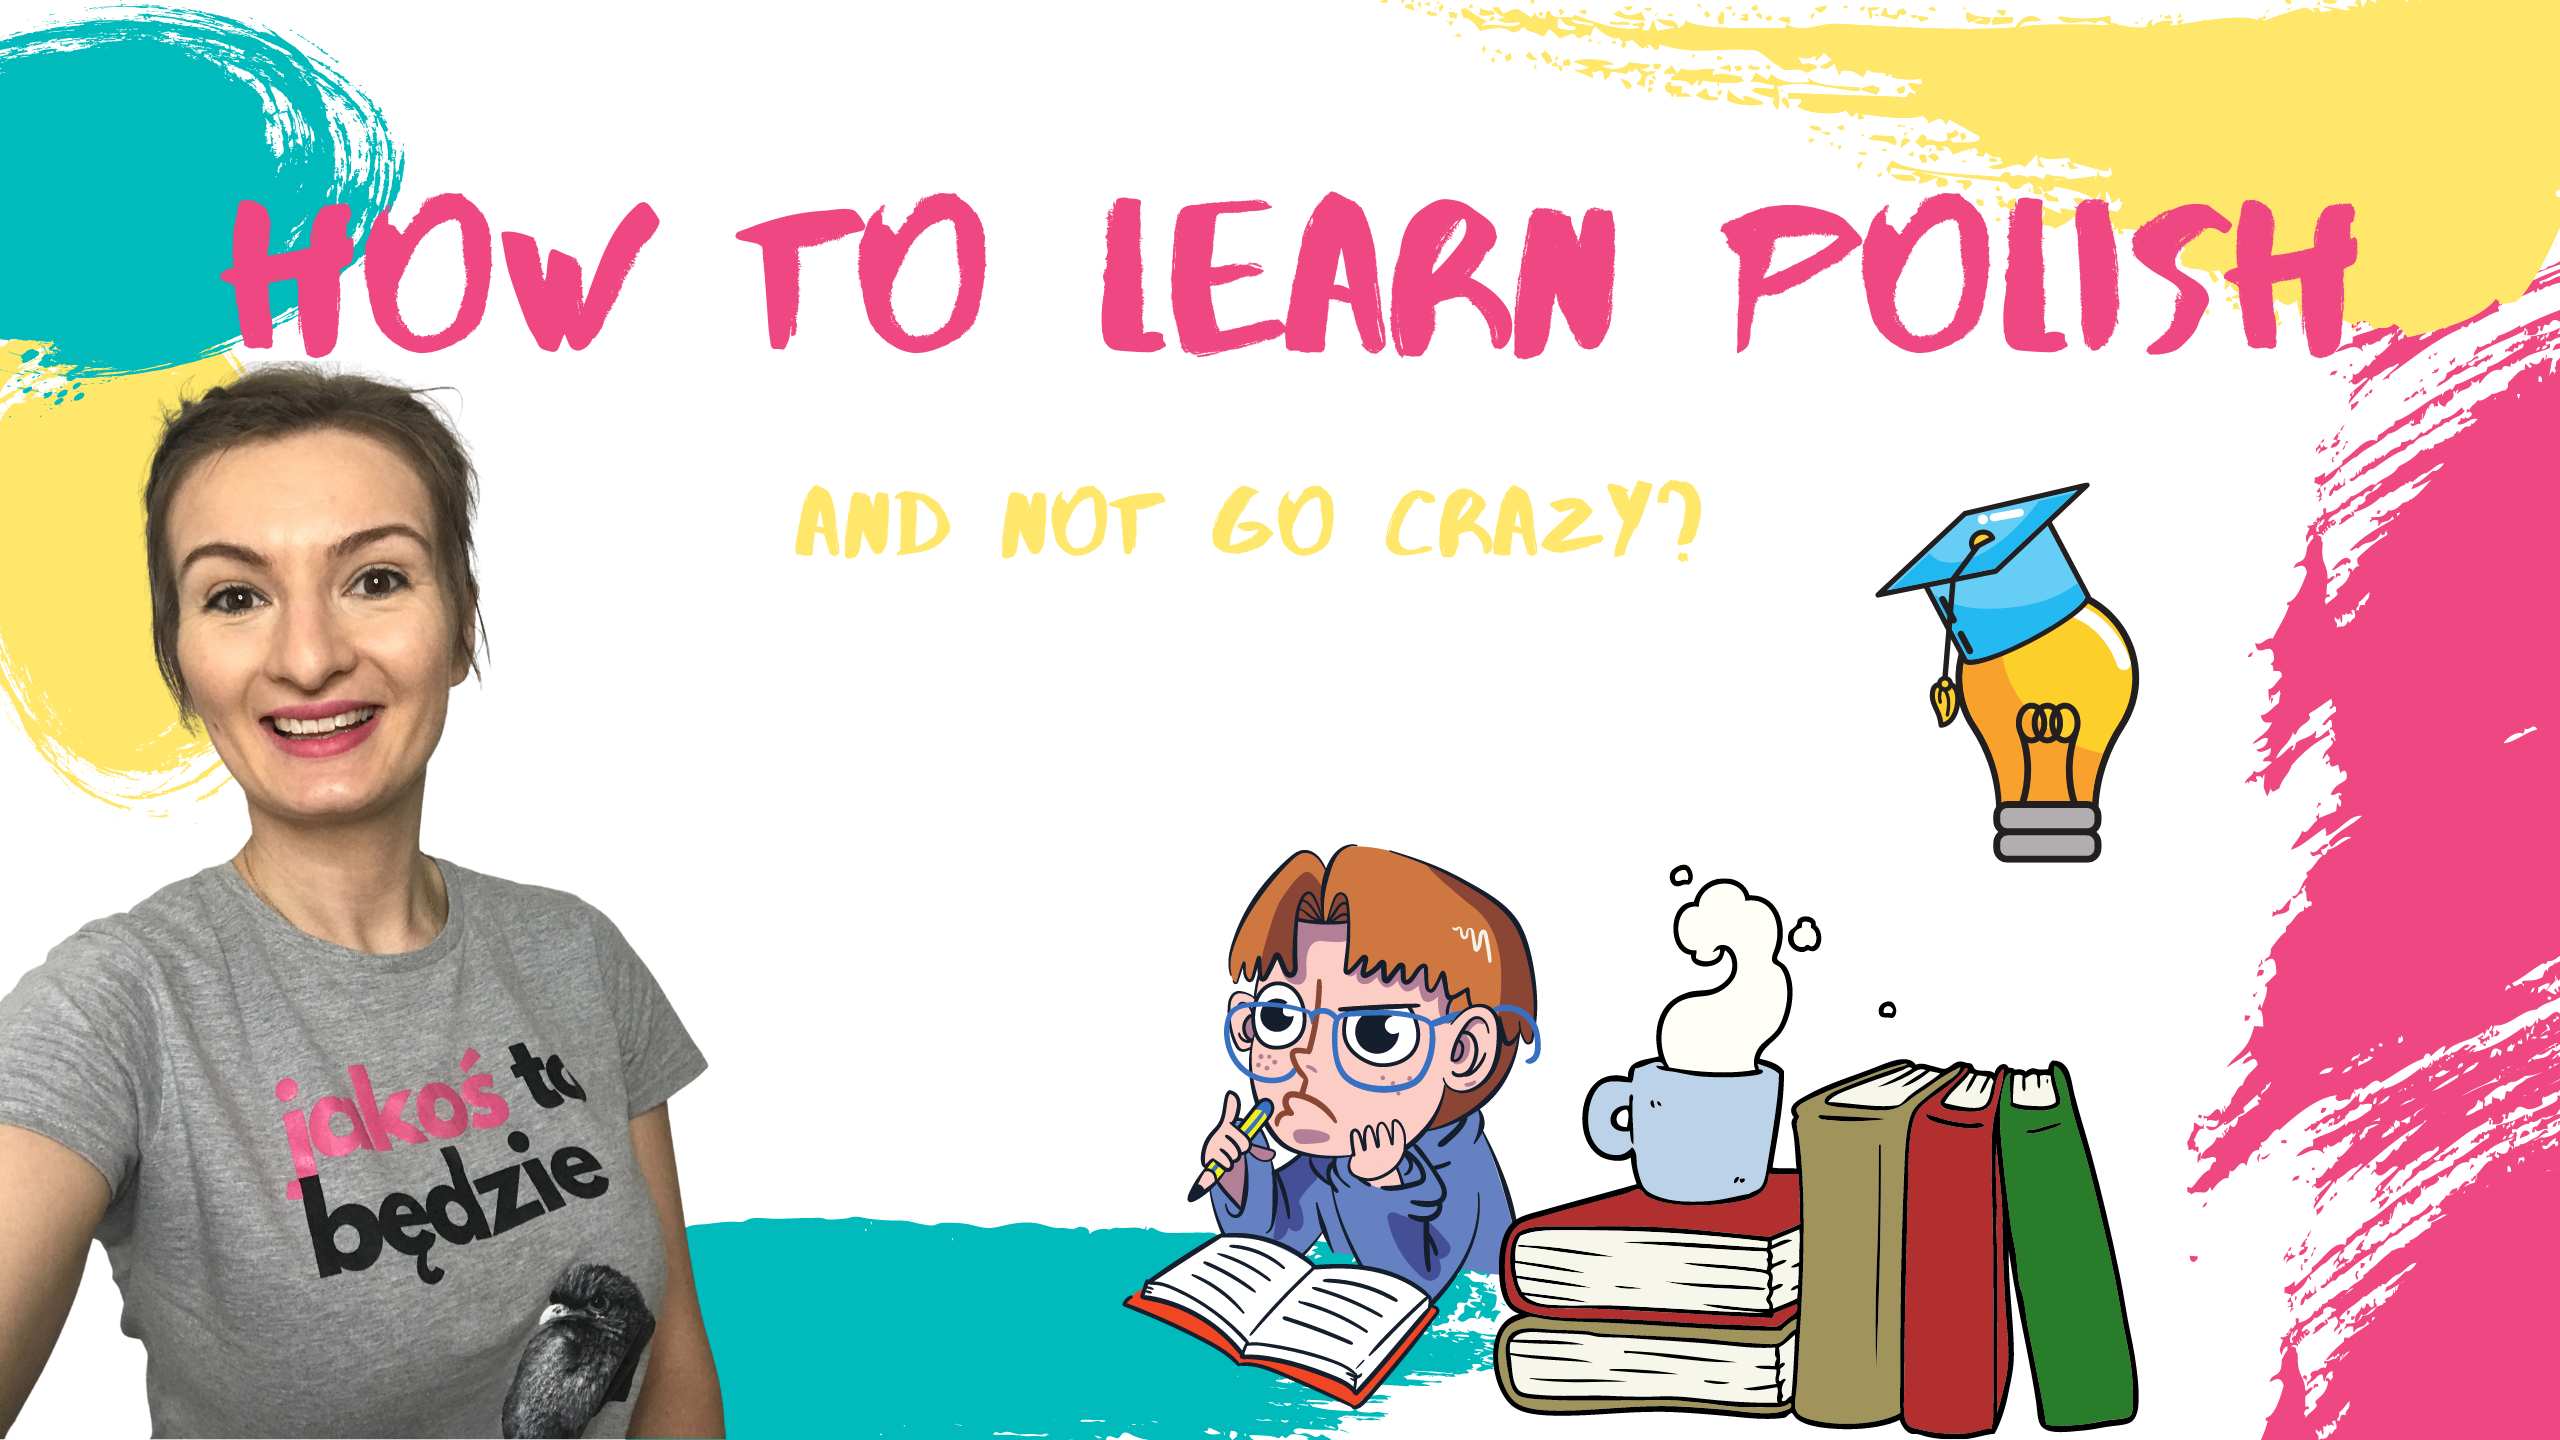 How to learn Polish